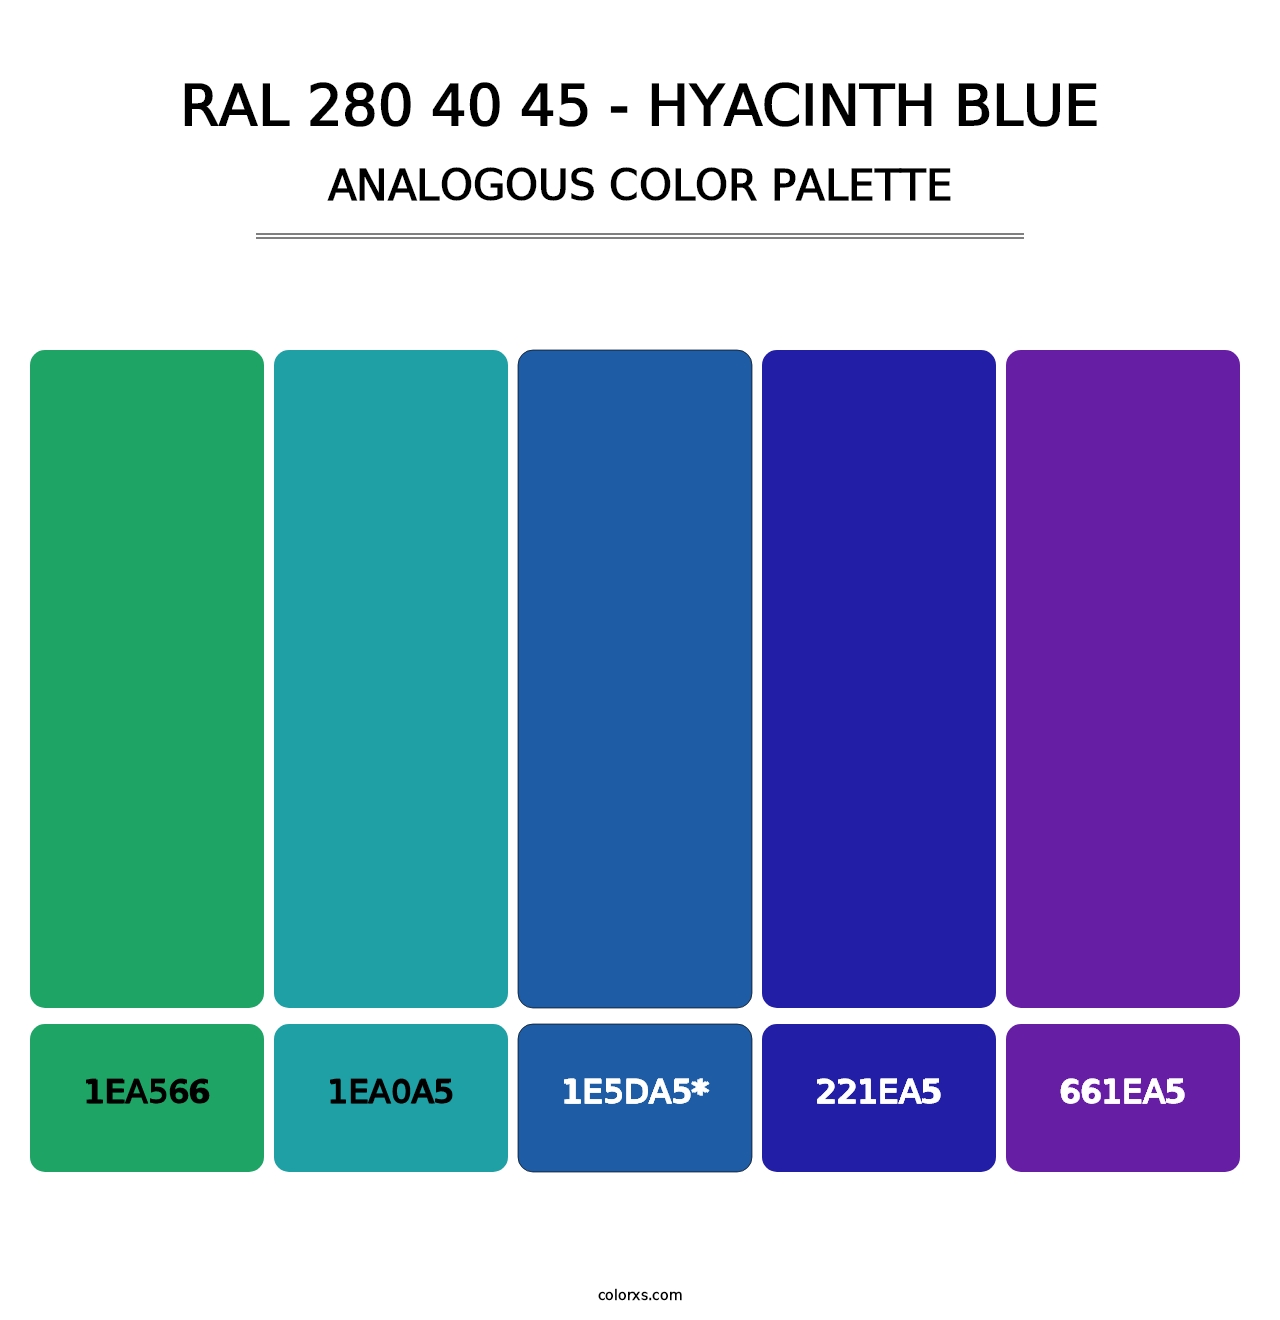 RAL 280 40 45 - Hyacinth Blue - Analogous Color Palette